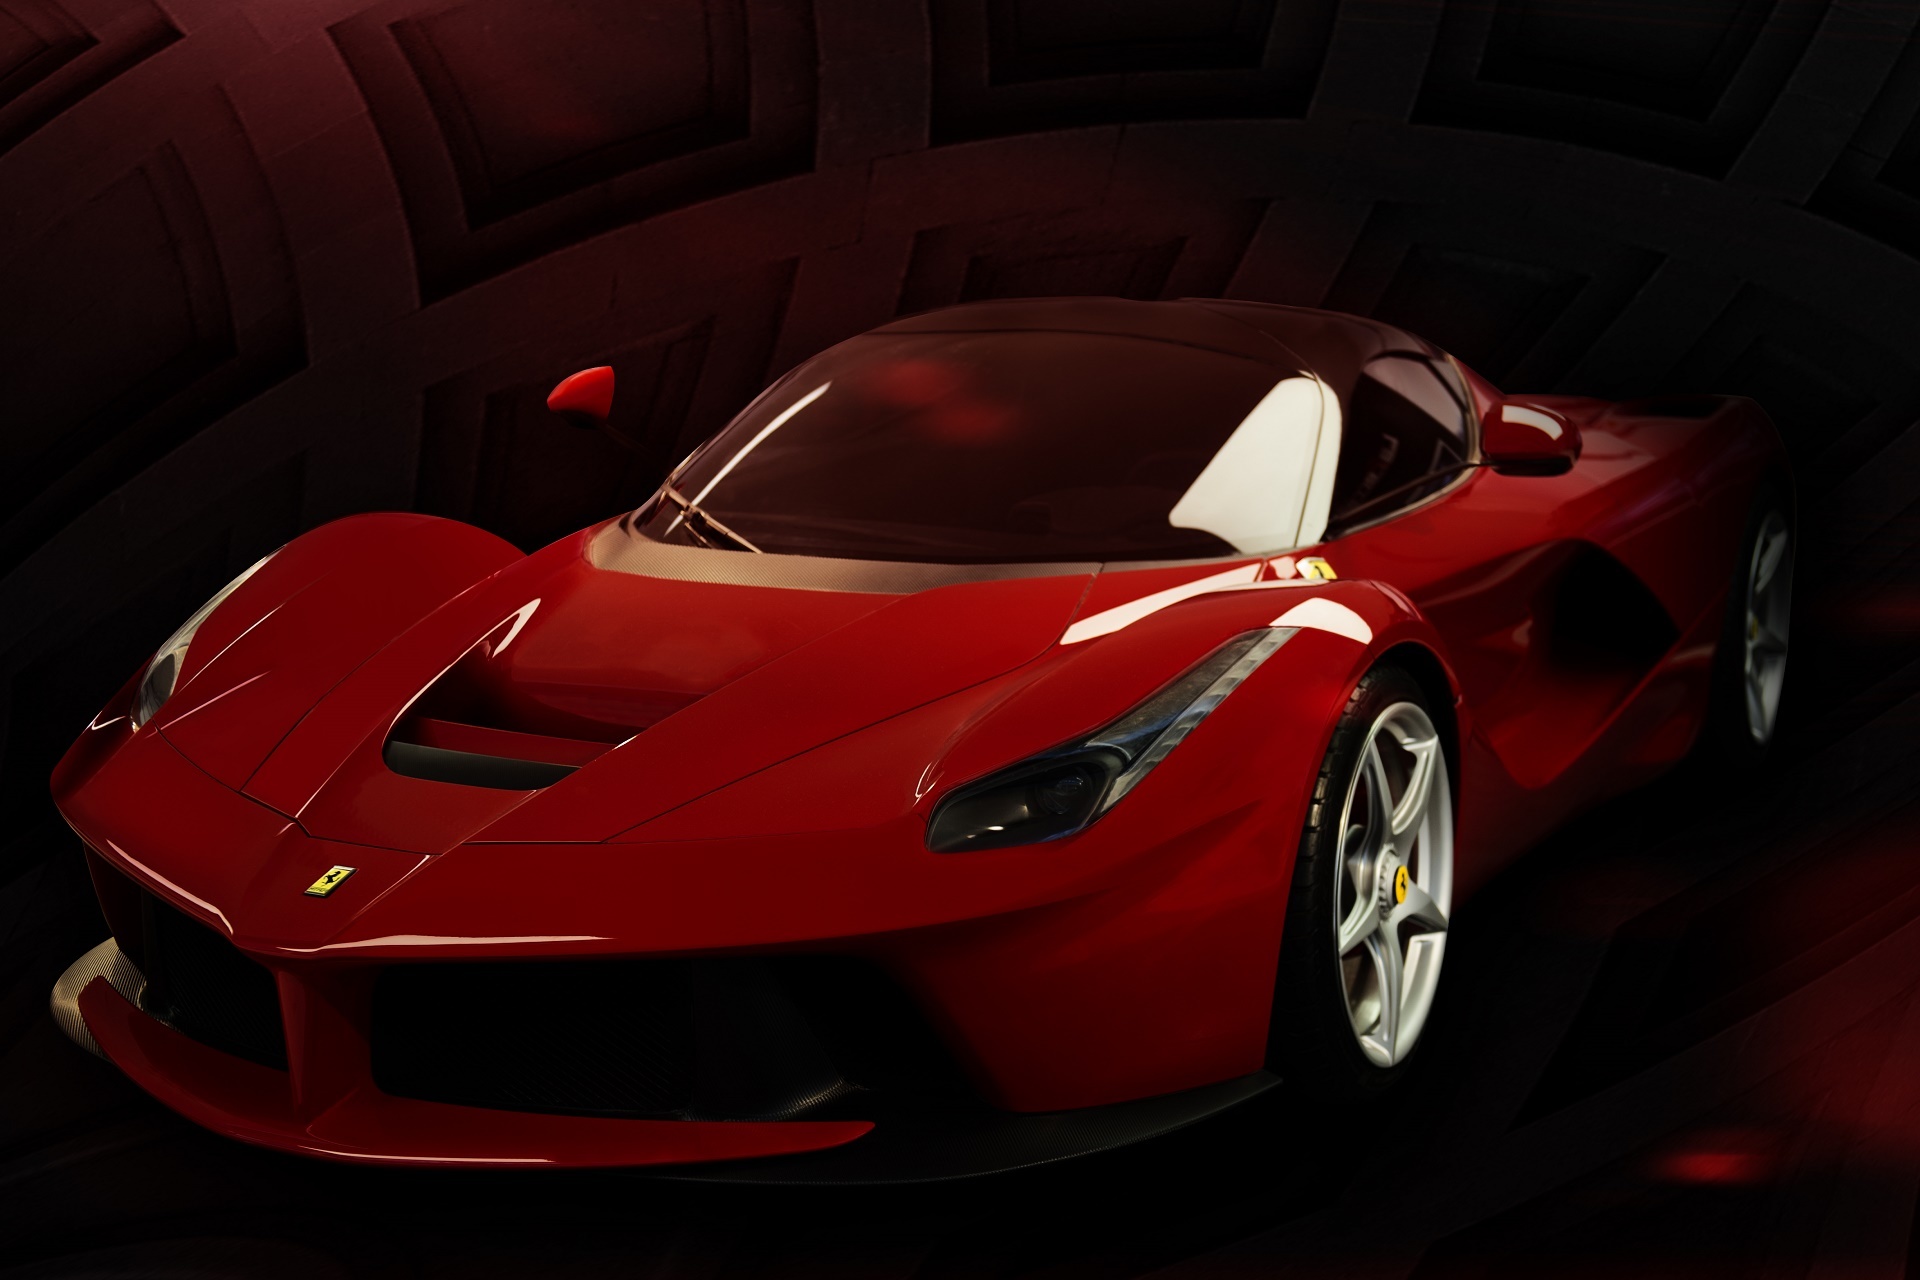 Laferrari Ferrari Red Supercar Car Wallpaper